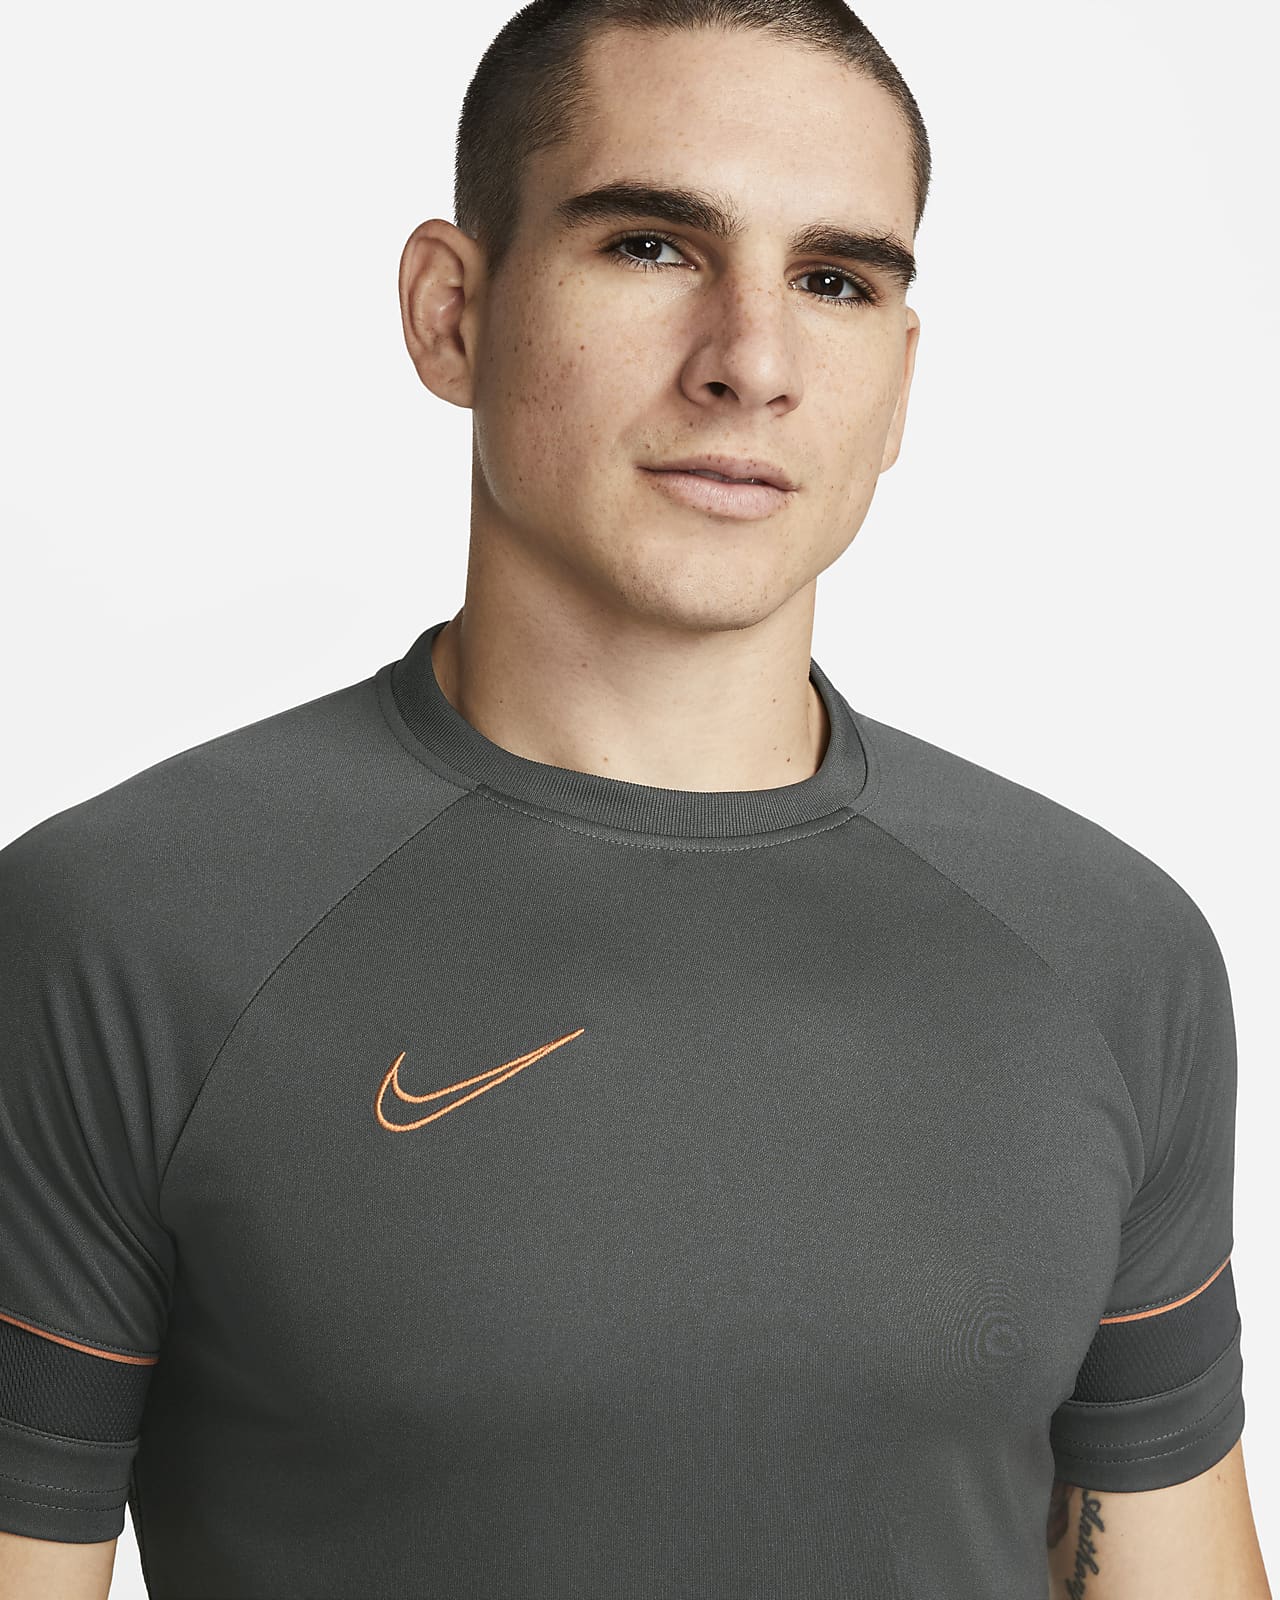 cargando Subvención pavimento Nike Dri-FIT Academy Camiseta de fútbol de manga corta - Hombre. Nike ES